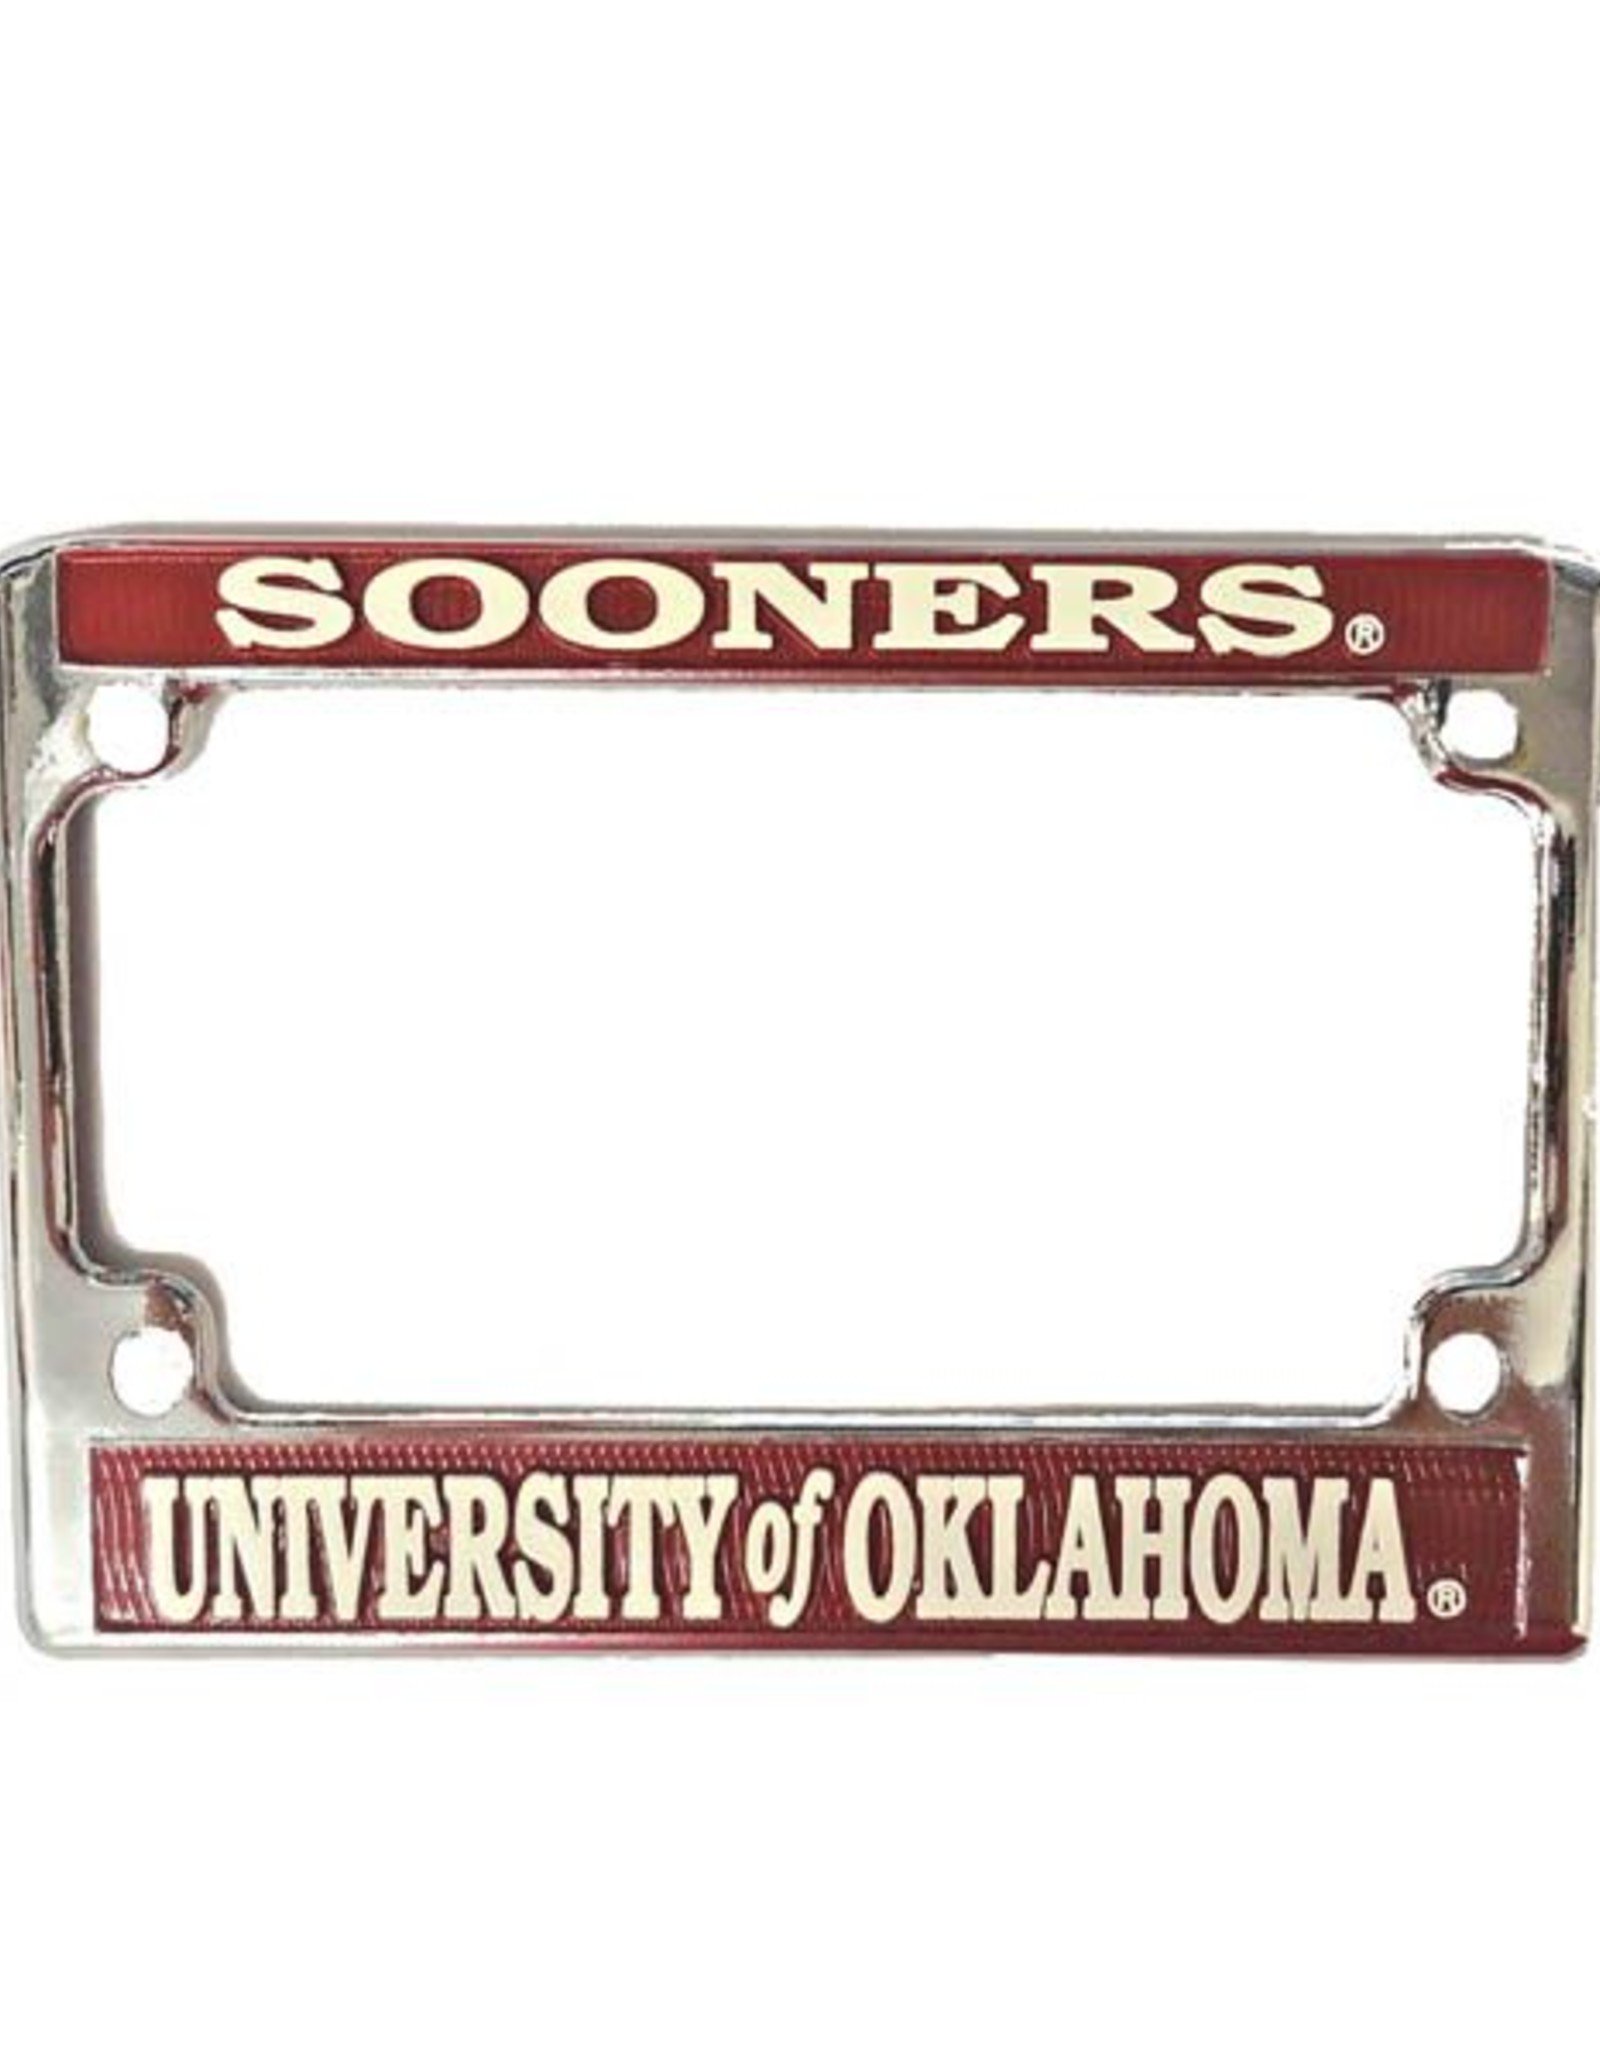 Jag Sooners/University of Oklahoma Motorcycle License Frame